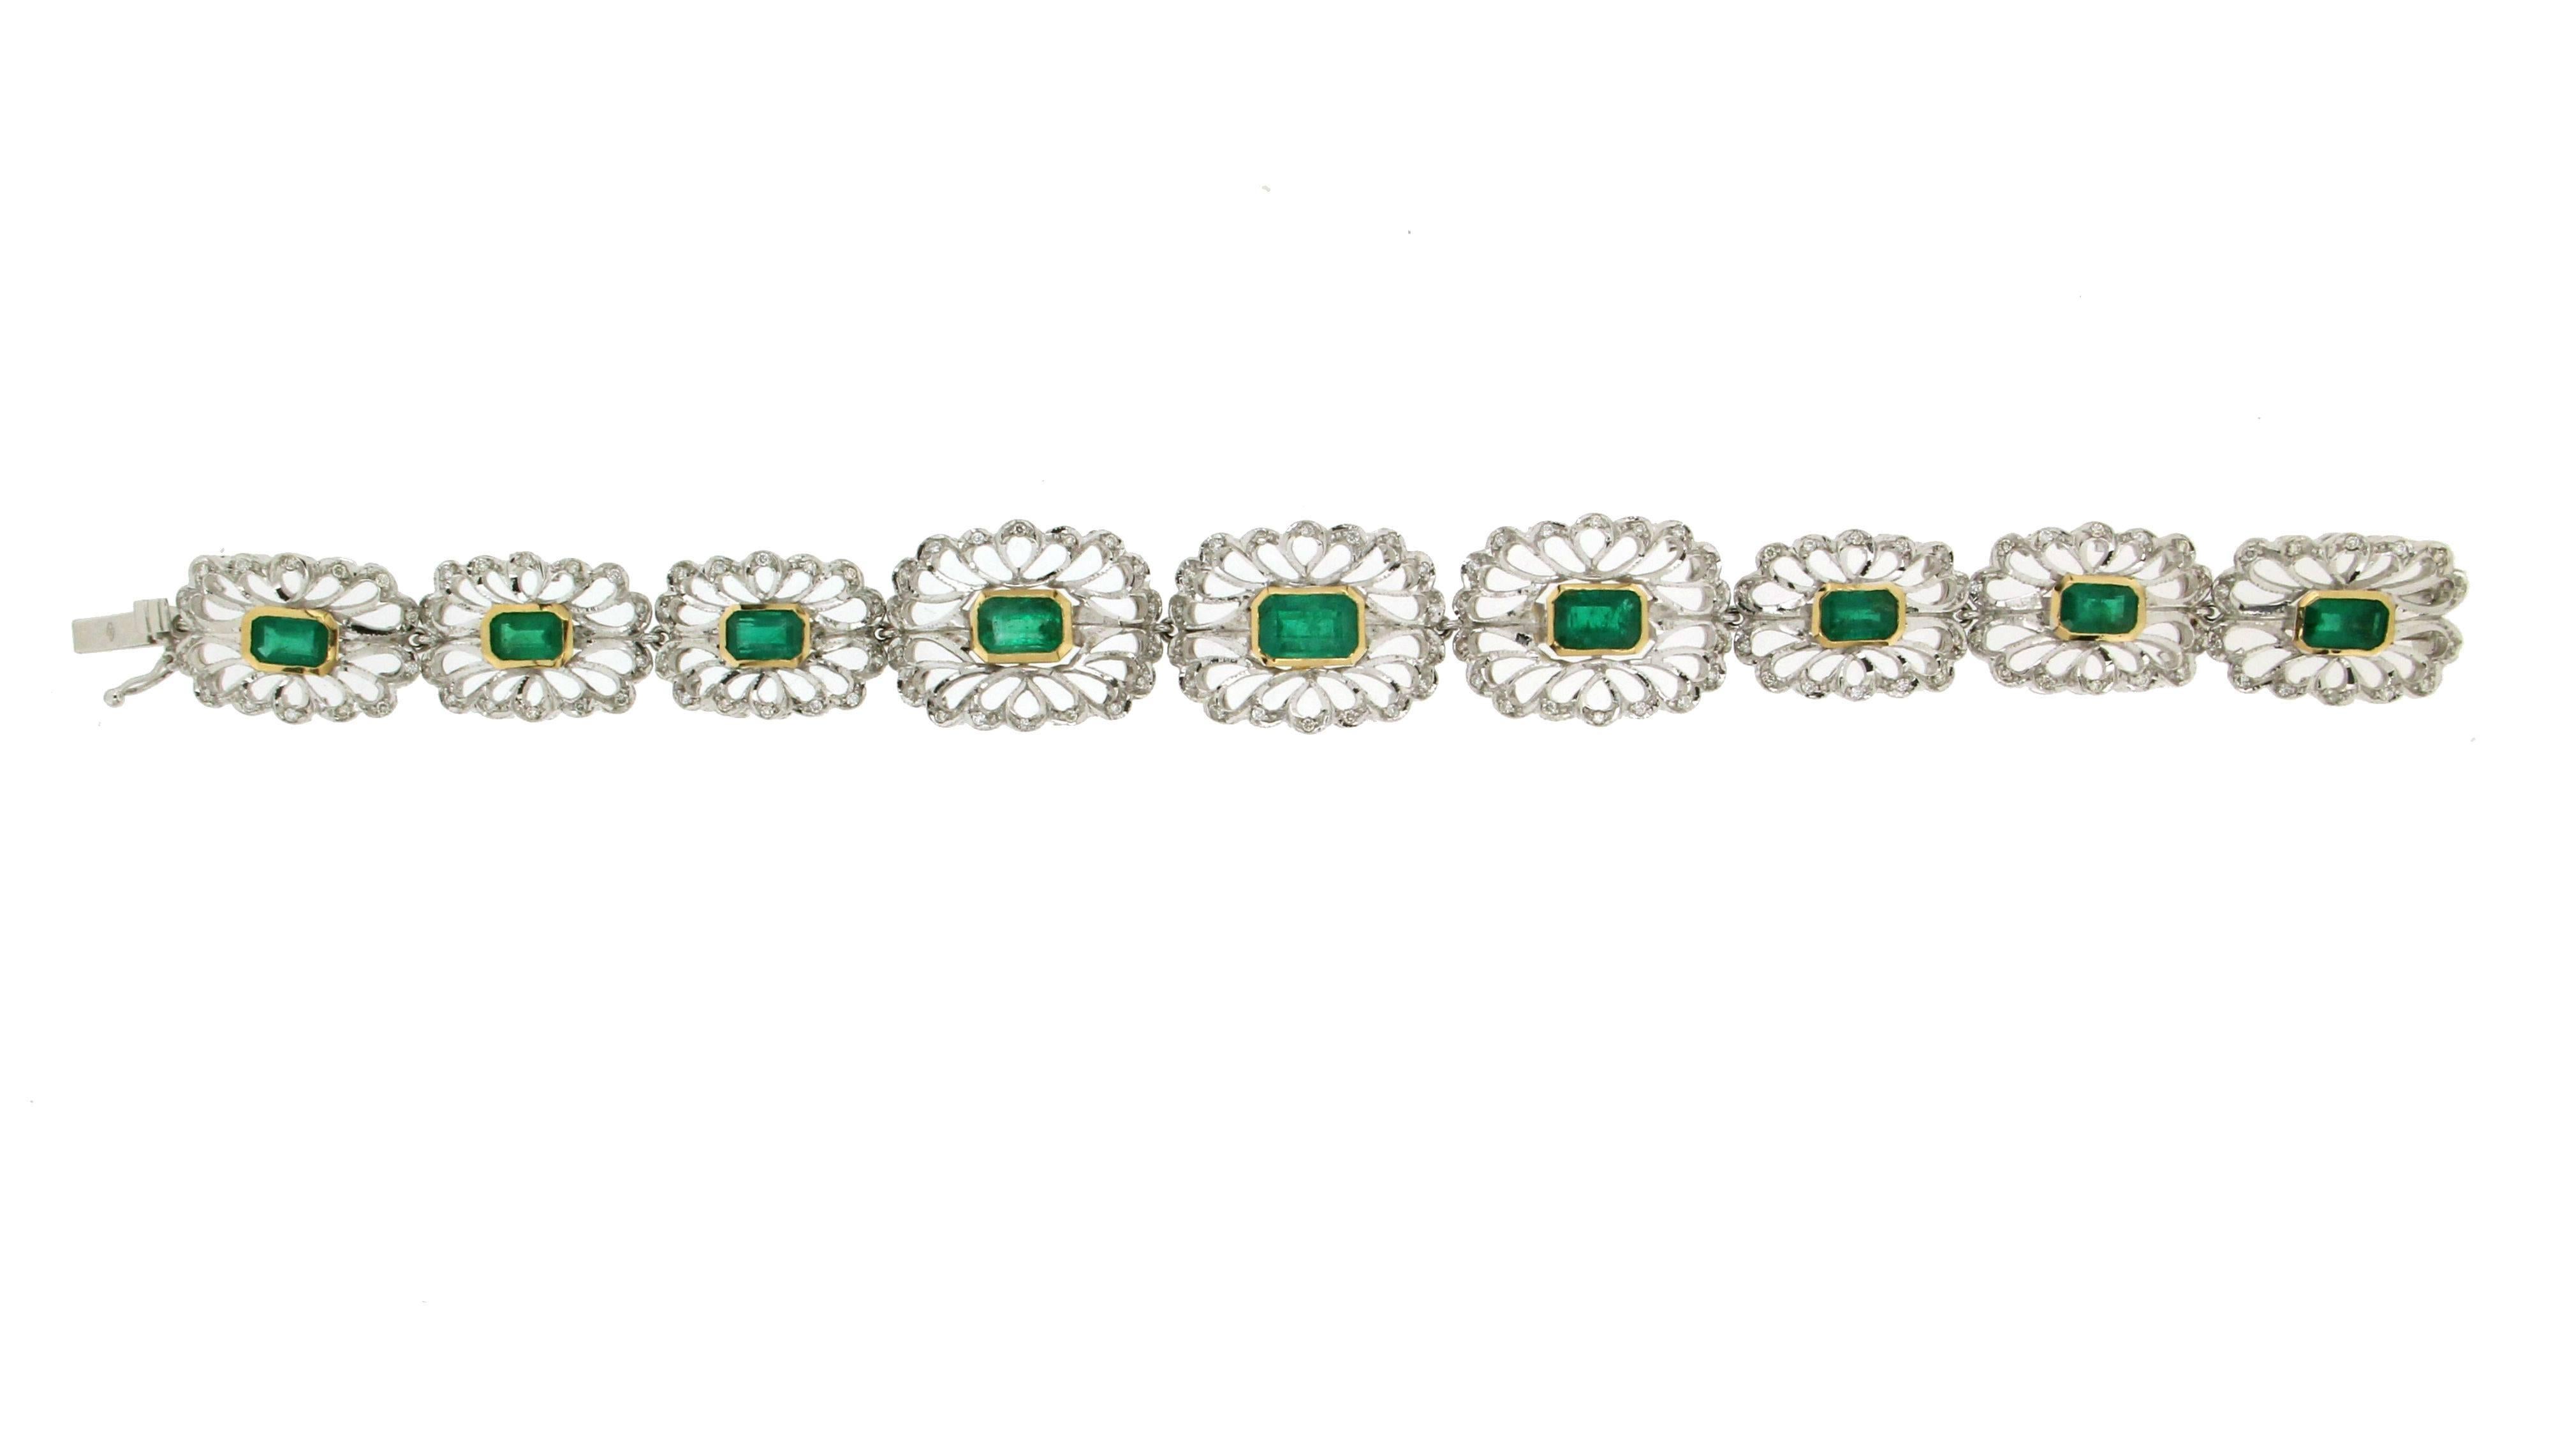 Colombian Emeralds,18 Karat White Gold,Diamonds,Cuff Bracelet

Bracelet Weight 34.60 Grams
Emeralds Weight 6.23 Karat
Diamonds Weight 0.79 Karat